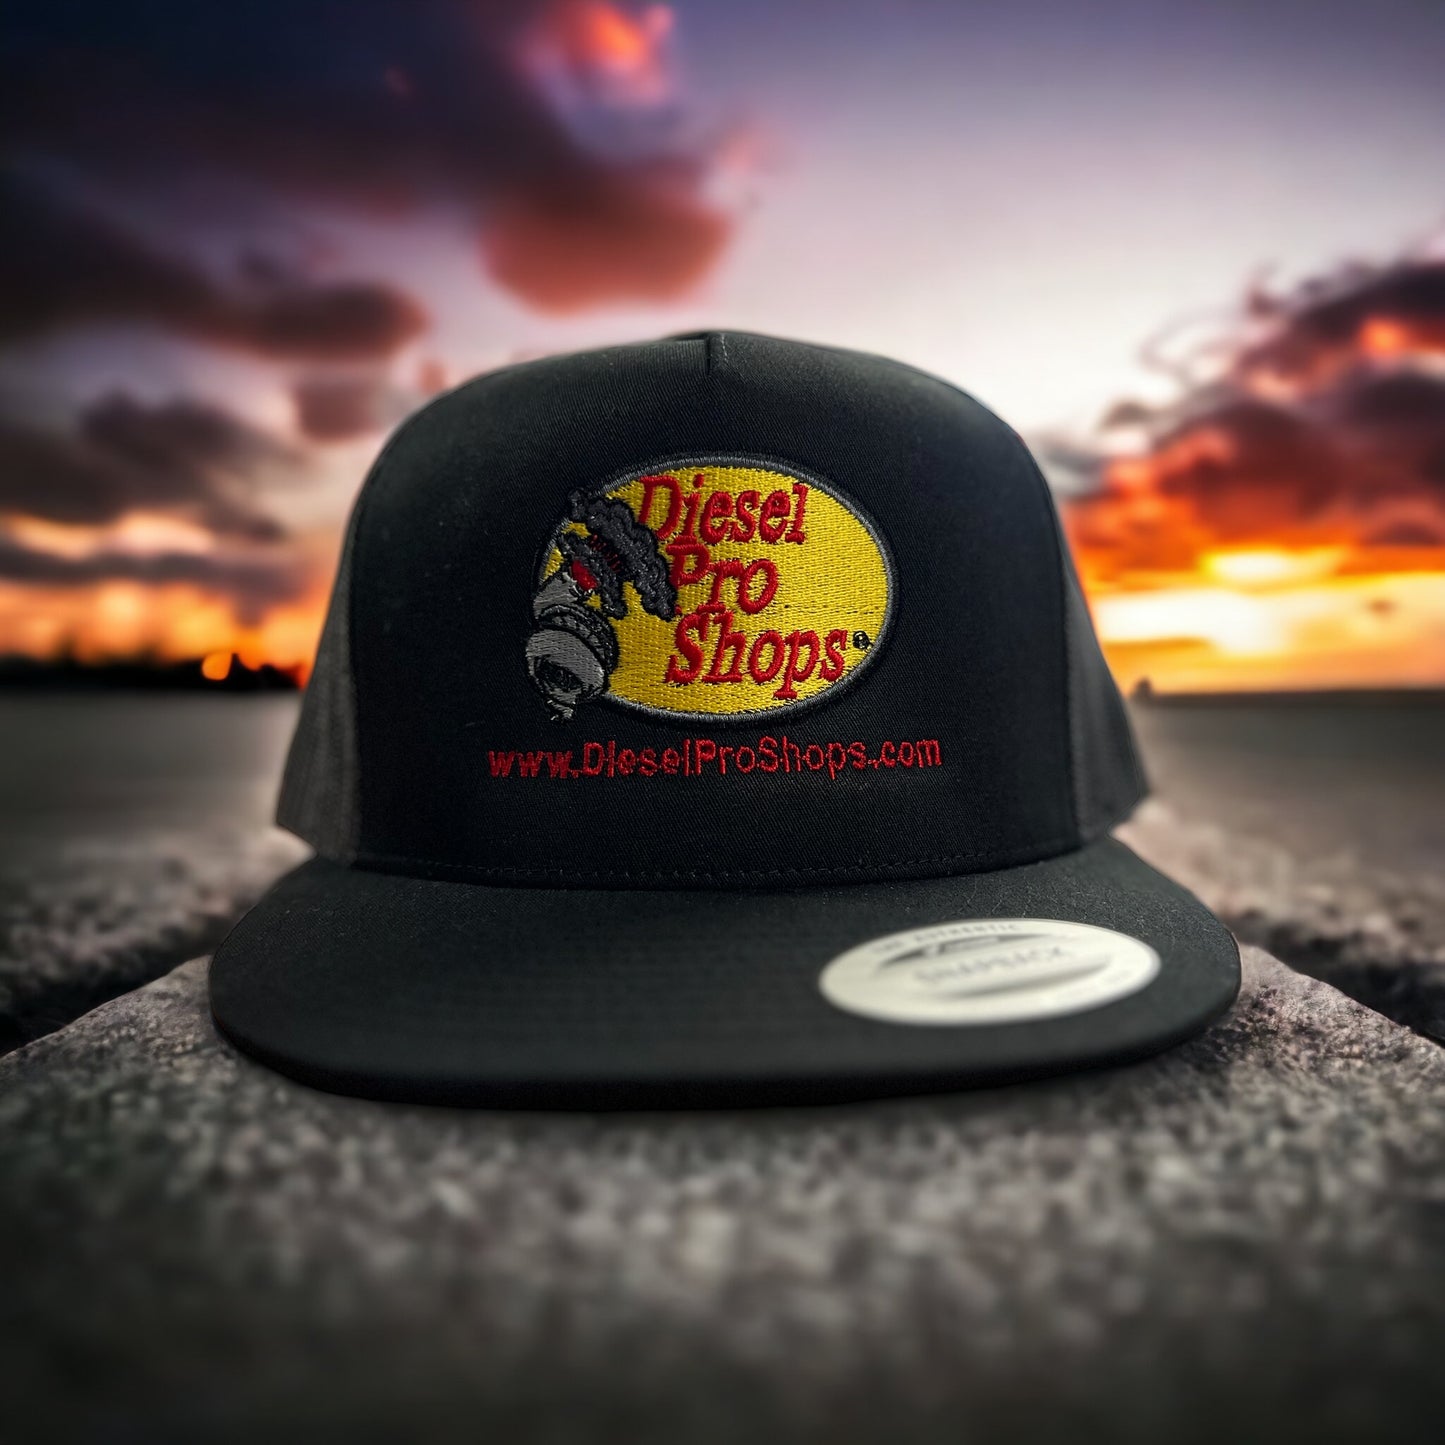 Diesel Pro Shops Hat